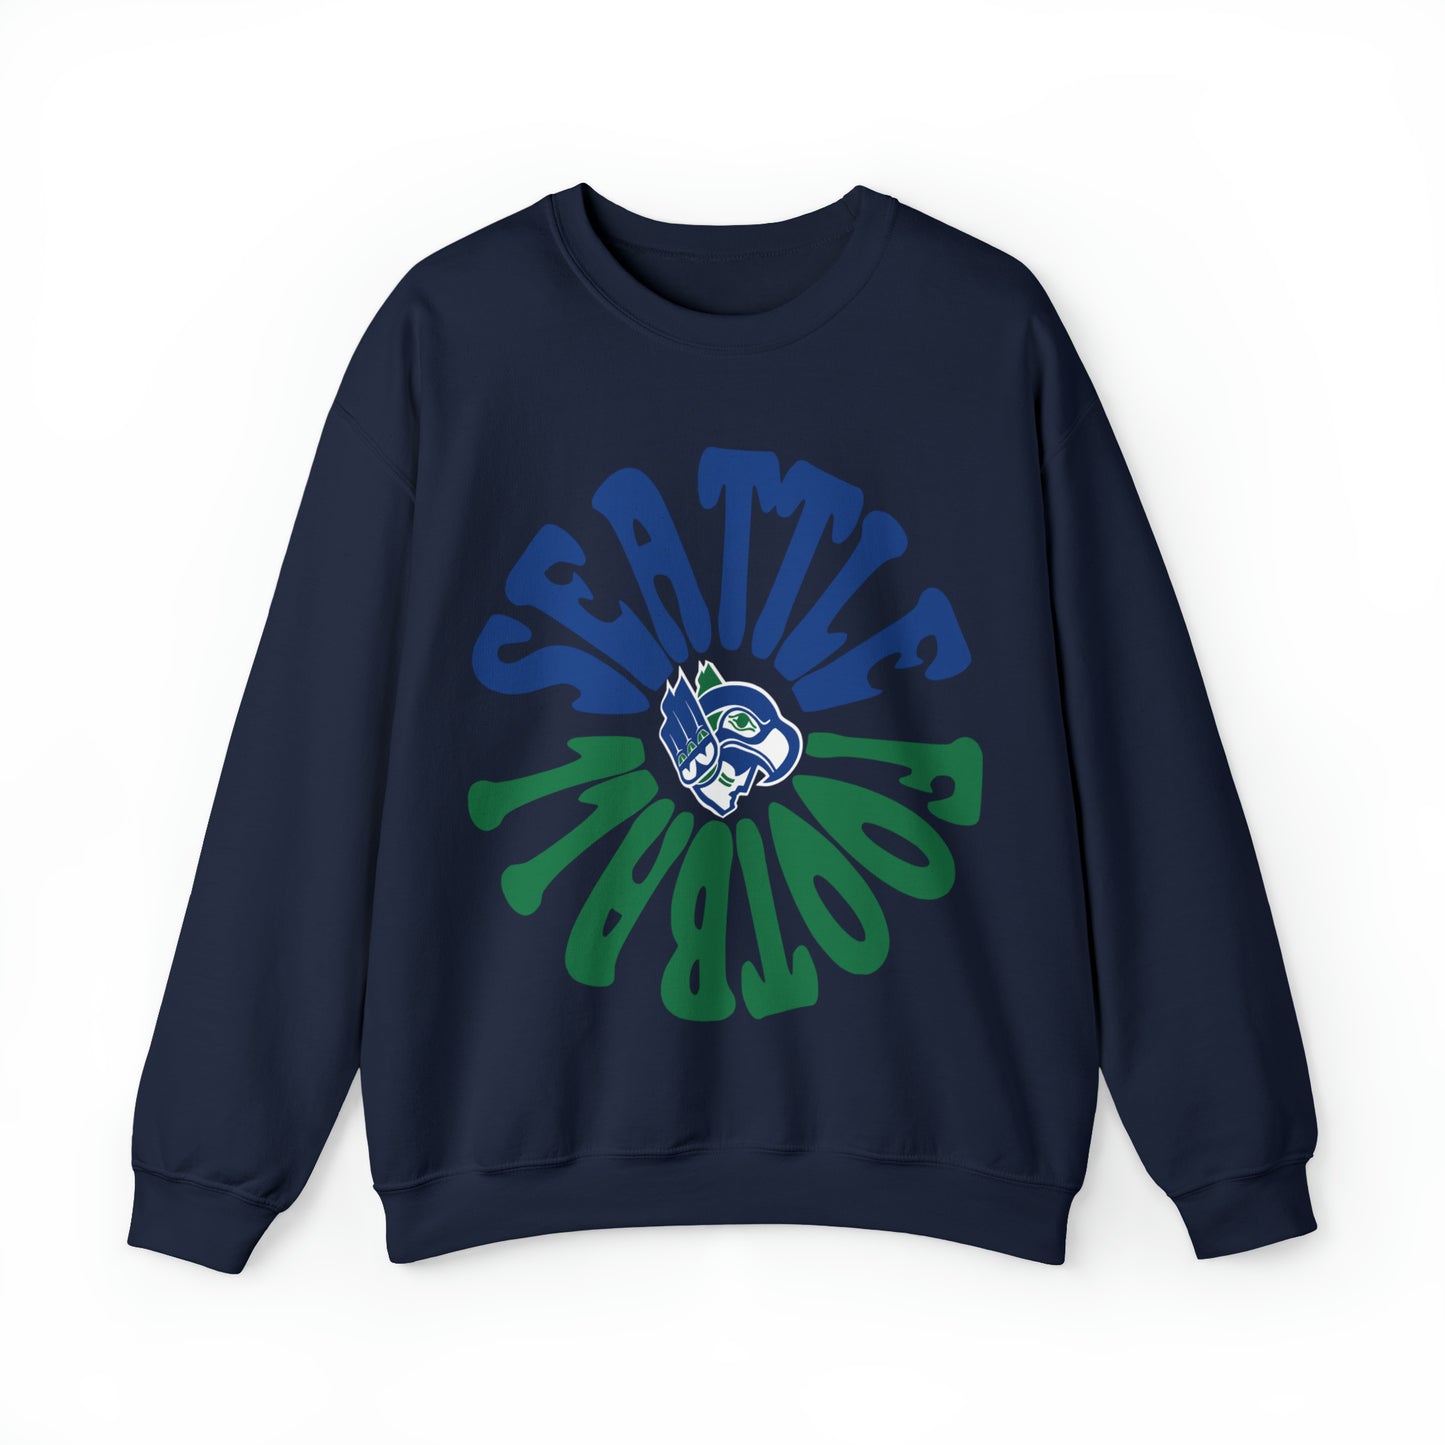 Hippy Retro Seattle Seahawks Sweatshirt - Vintage Style Football Crewneck - Men's & Women's Retro Apparel - Design 2